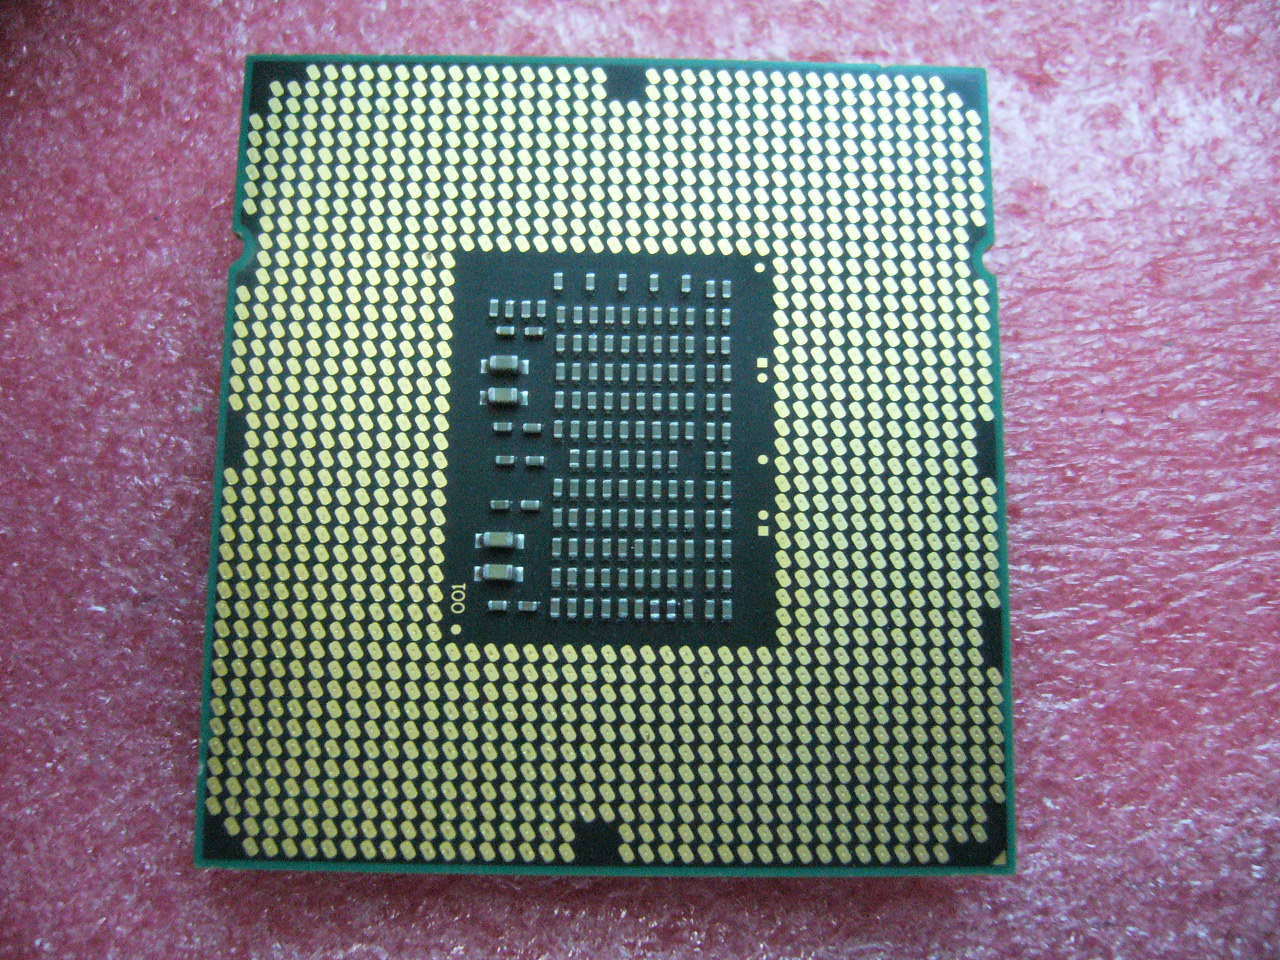 QTY 1x INTEL Quad-Cores CPU LC5528 2.13GHZ/8MB LGA1366 SLBWK - Click Image to Close